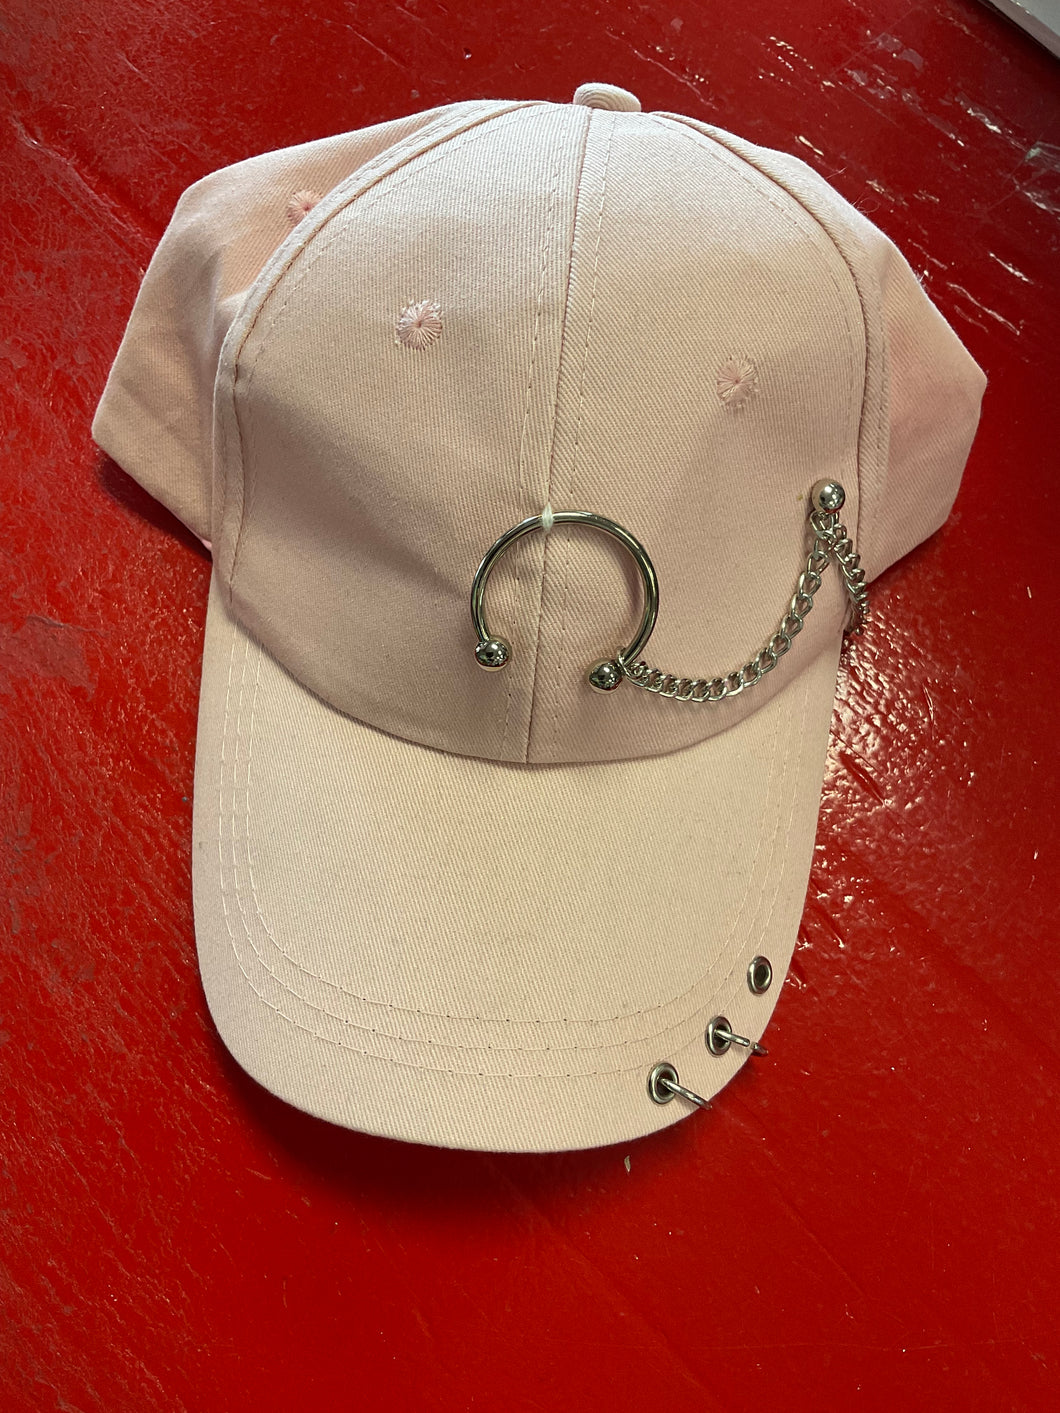 pink chain hat/ball cap